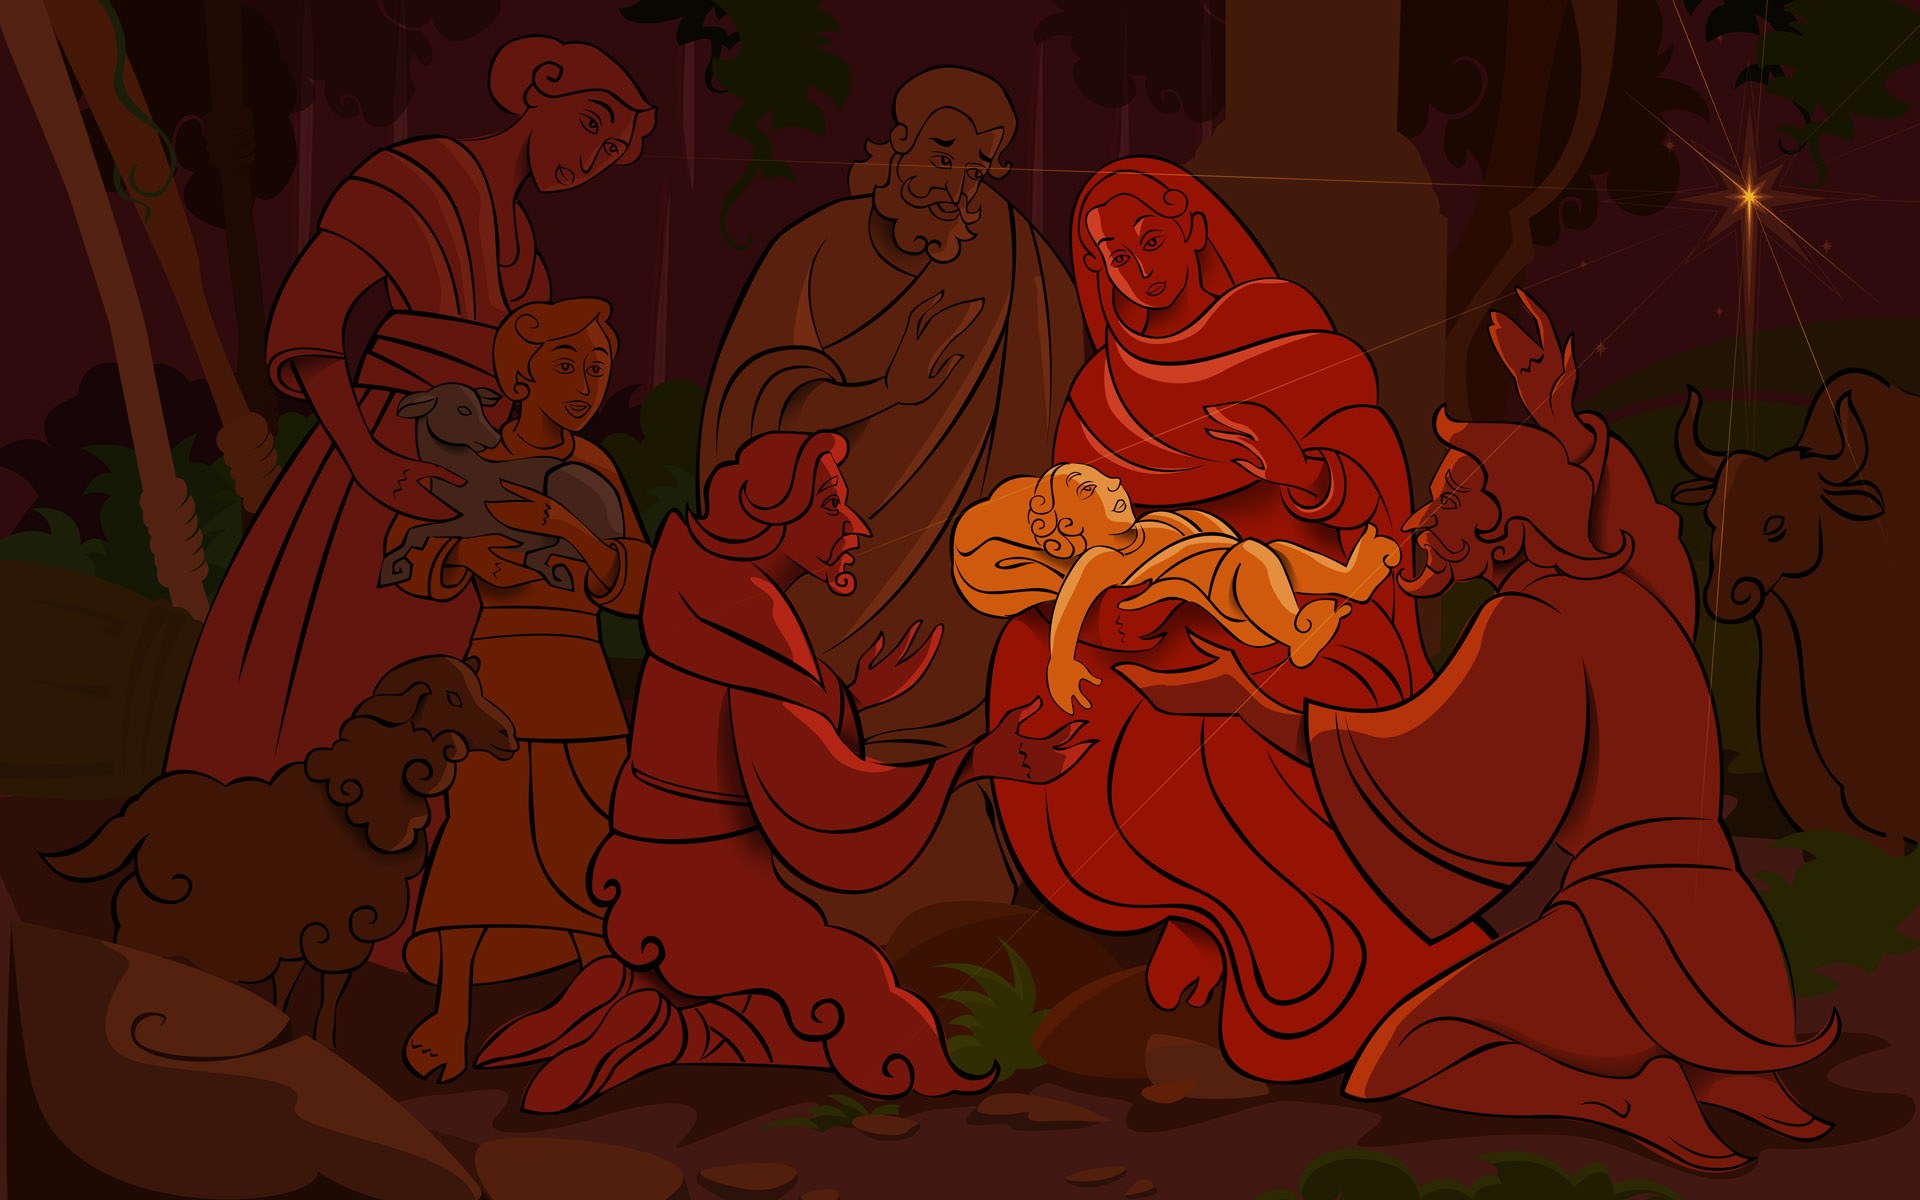 24 19 1 0 Illustration - Nativity scene - The Birth of Jesus